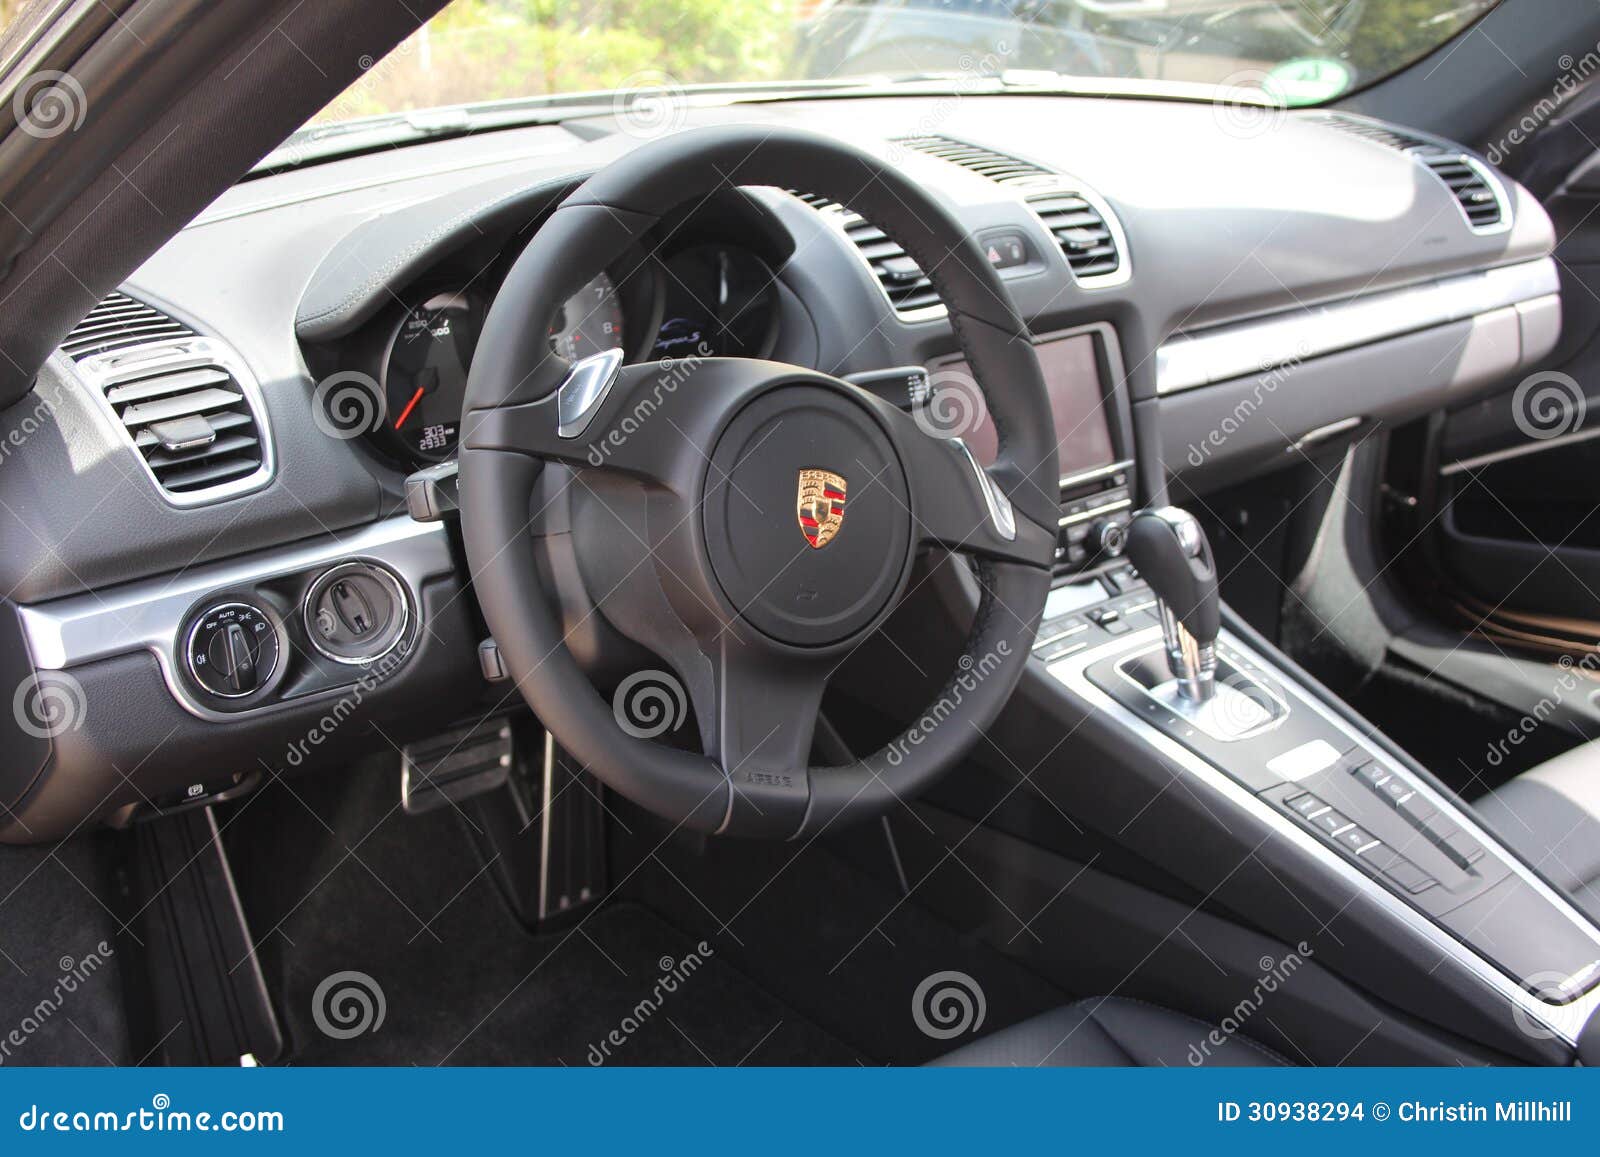 Porsche 718 Cayman S Interior Exterior and Drive  YouTube